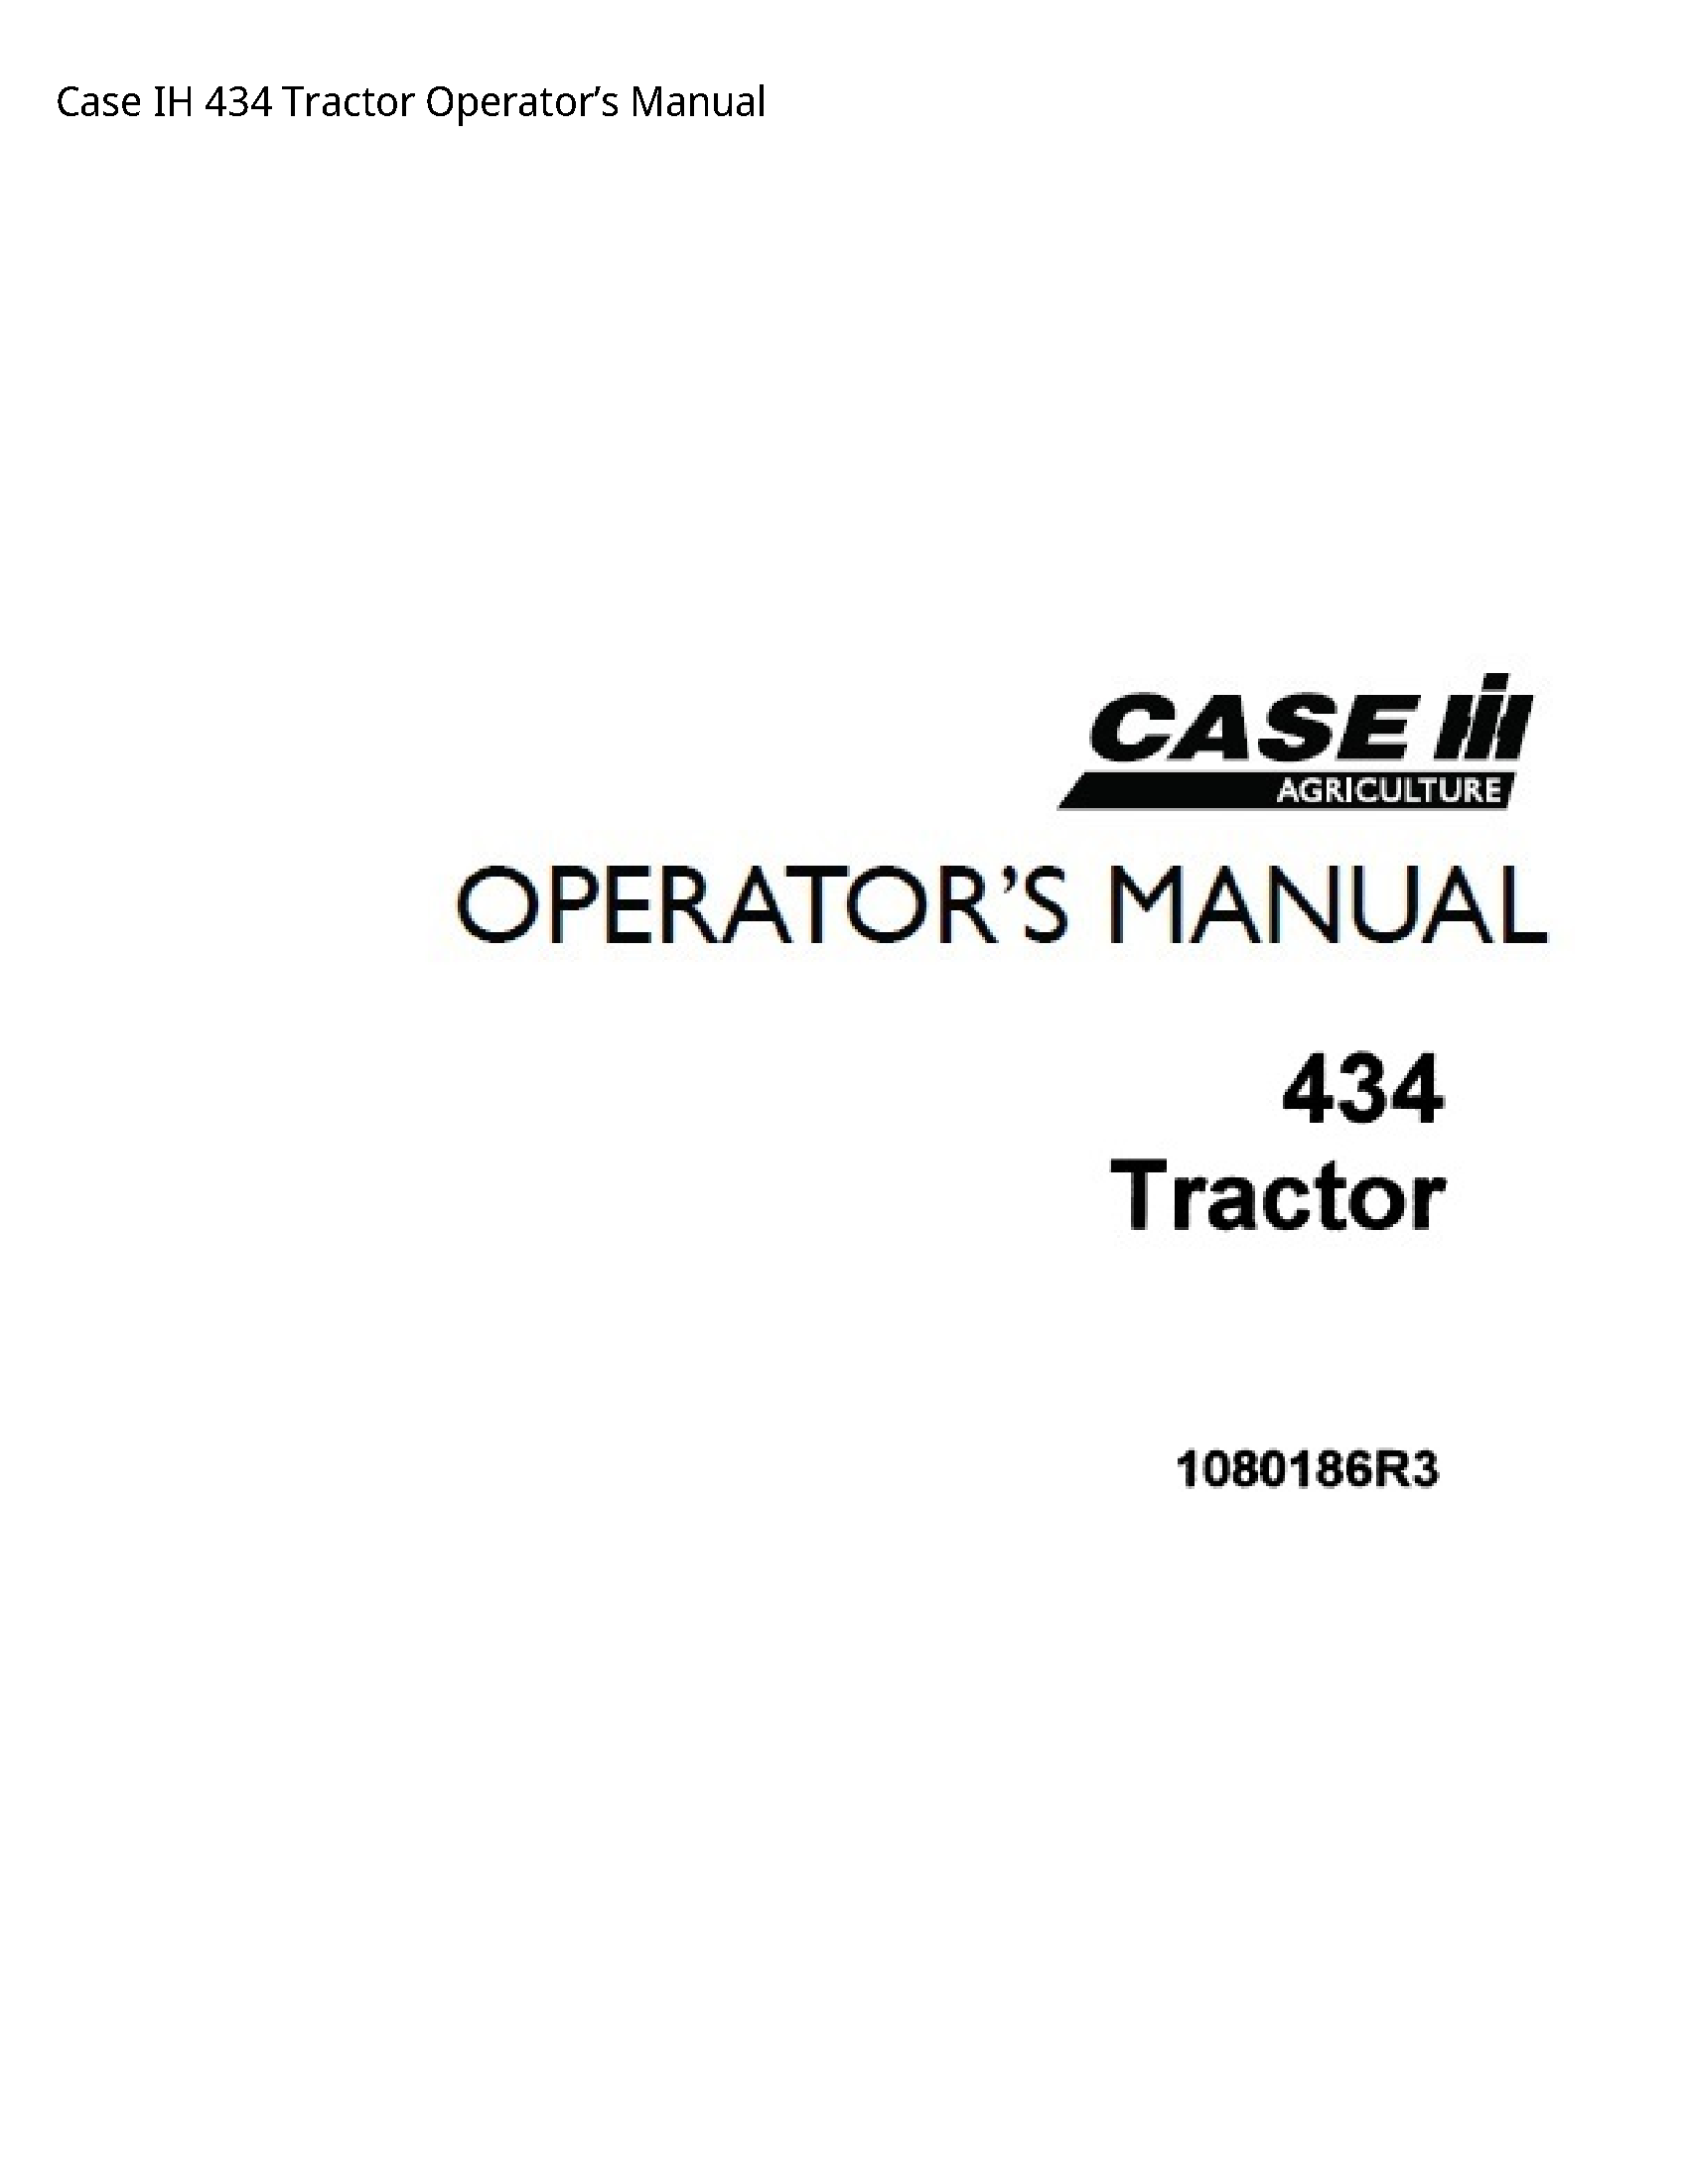 Case/Case IH 434 IH Tractor Operator’s manual